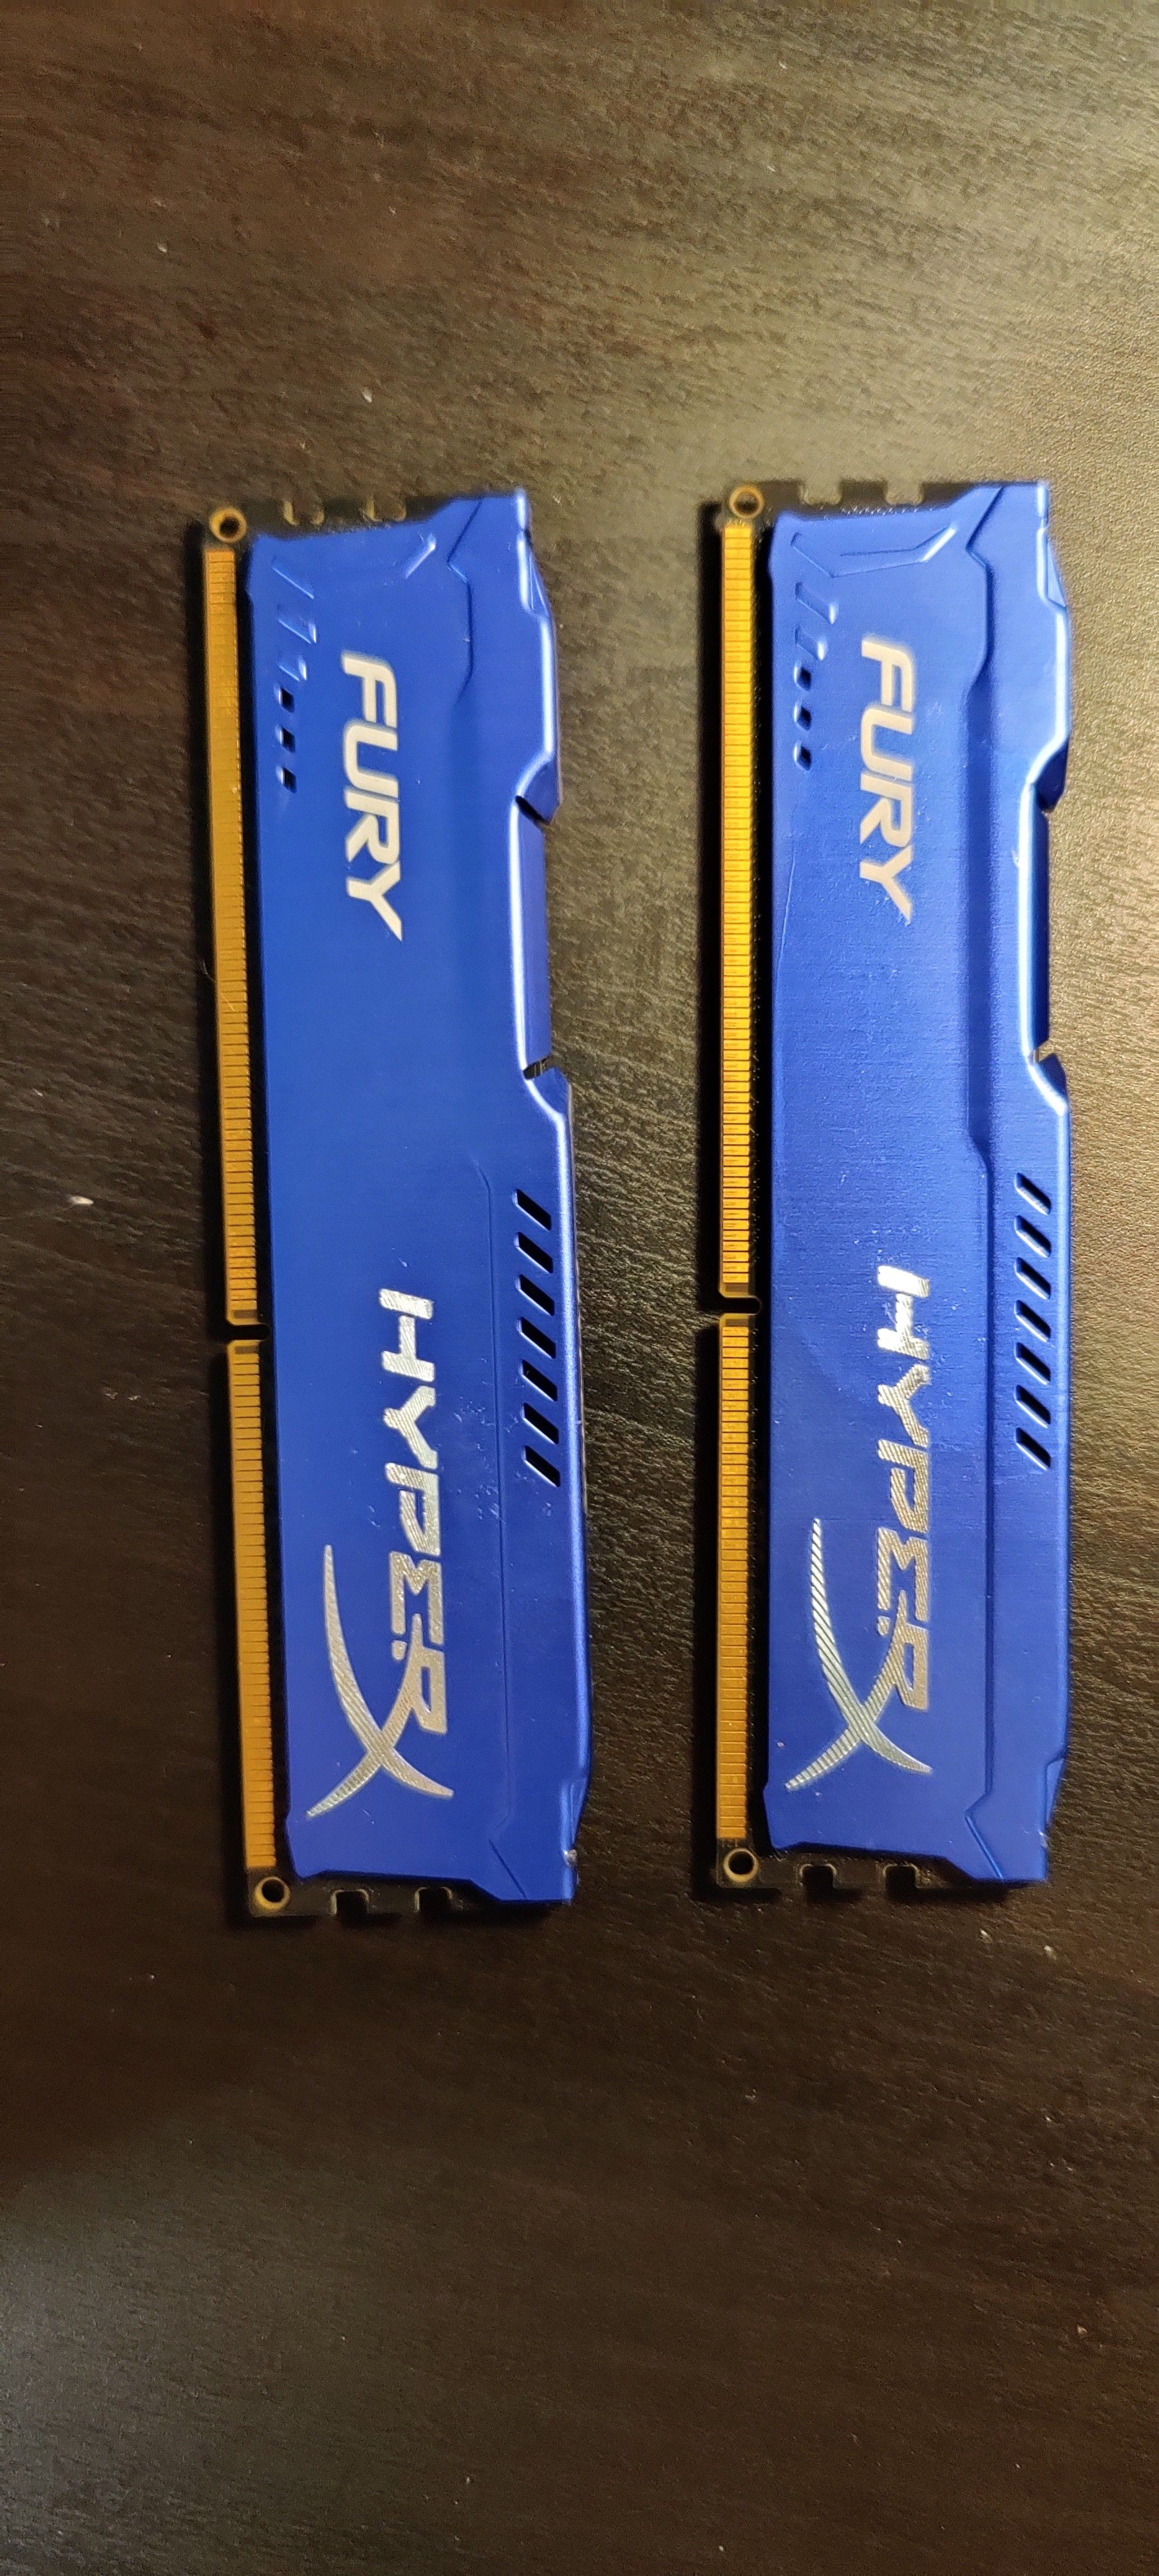 8GB HyperX DDR3 RAM - 2 x 4GB sticks